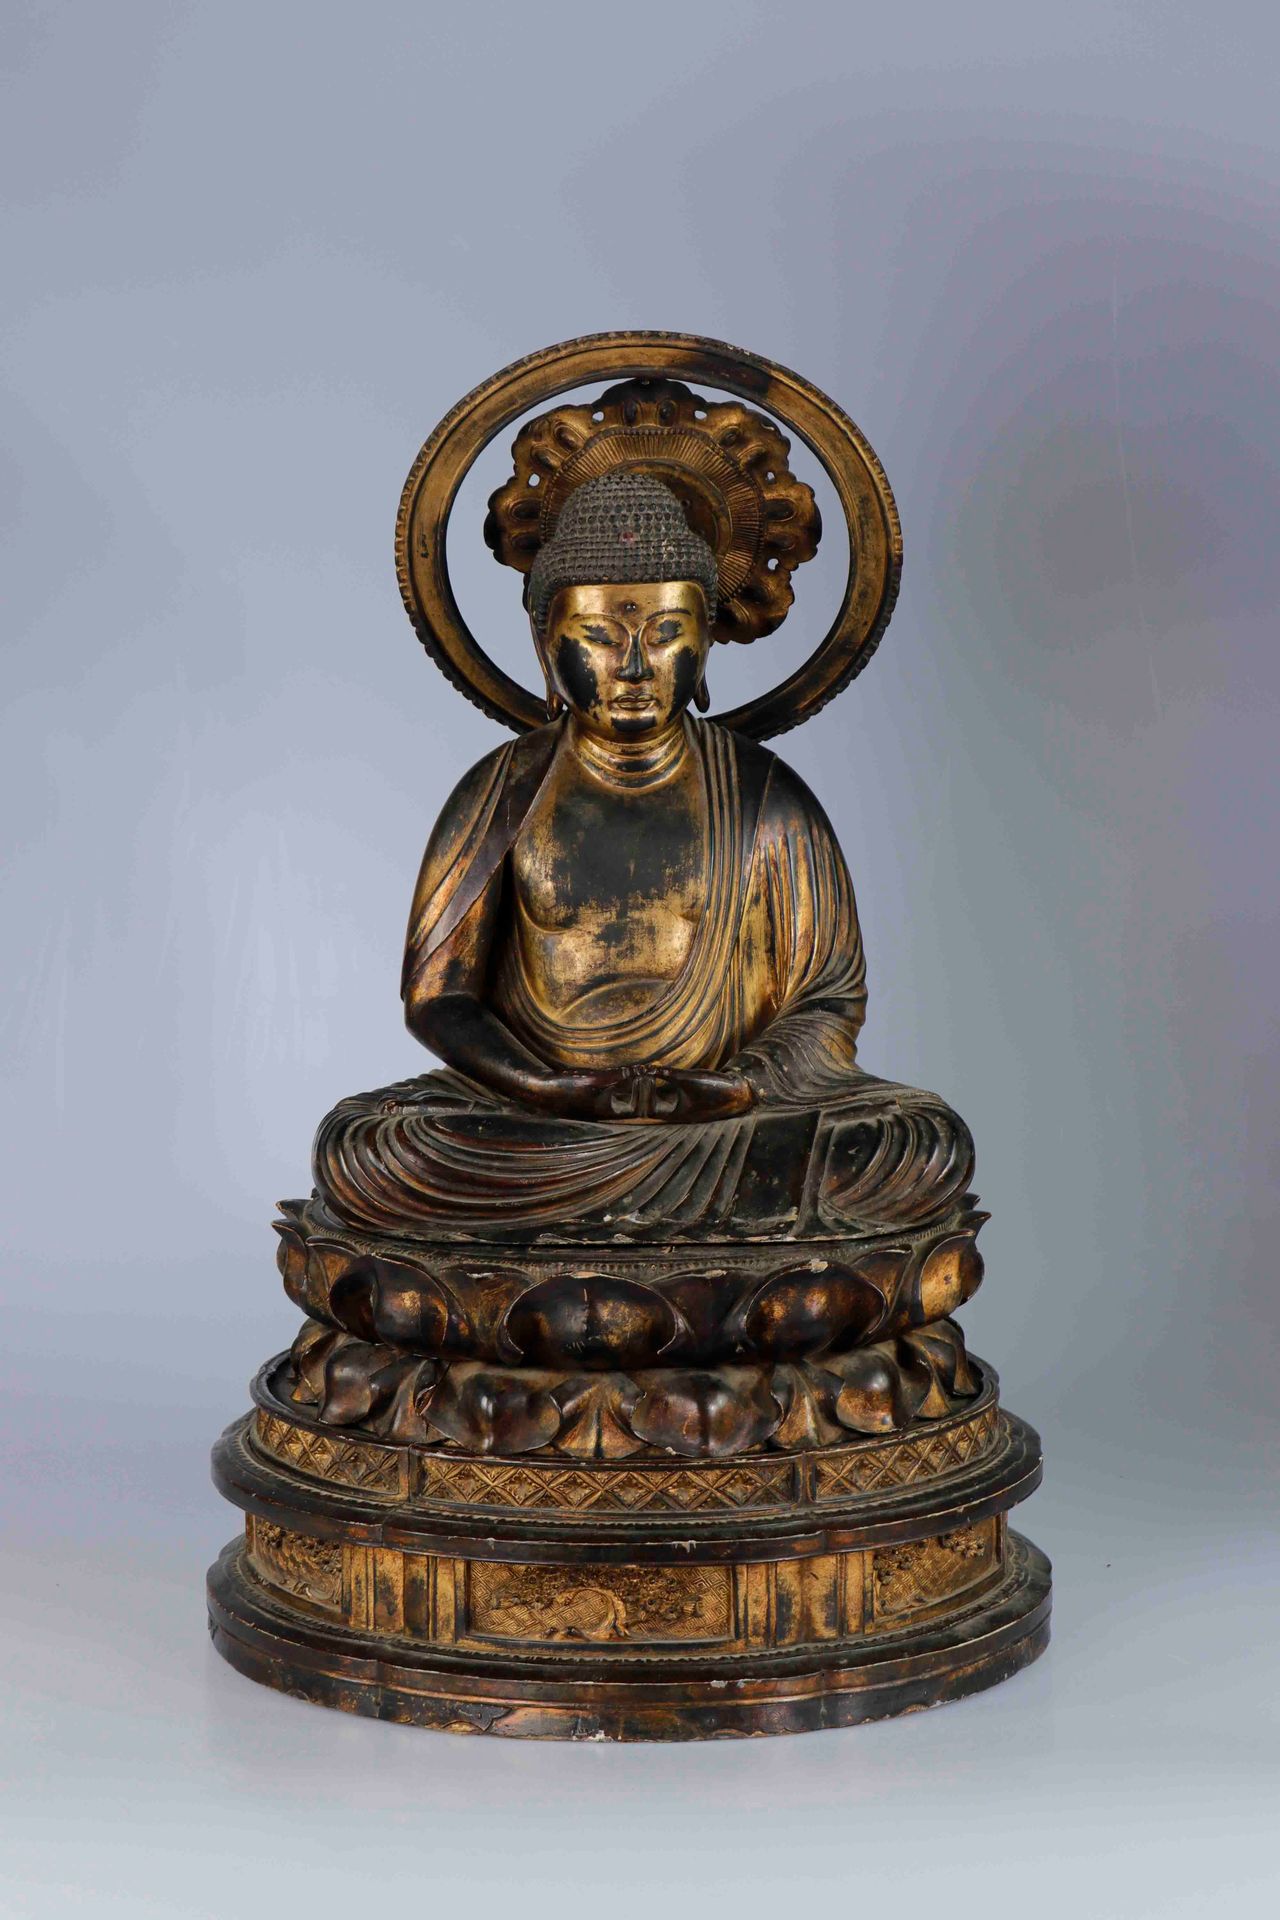 Null 日本，江户时代。大型罕见的漆器和镀金的木制雕像。它表现了阿弥陀佛以冥想的姿势坐在一朵盛开的莲花上，靠在一个层层叠叠的底座上，他的双手呈dyana mu&hellip;